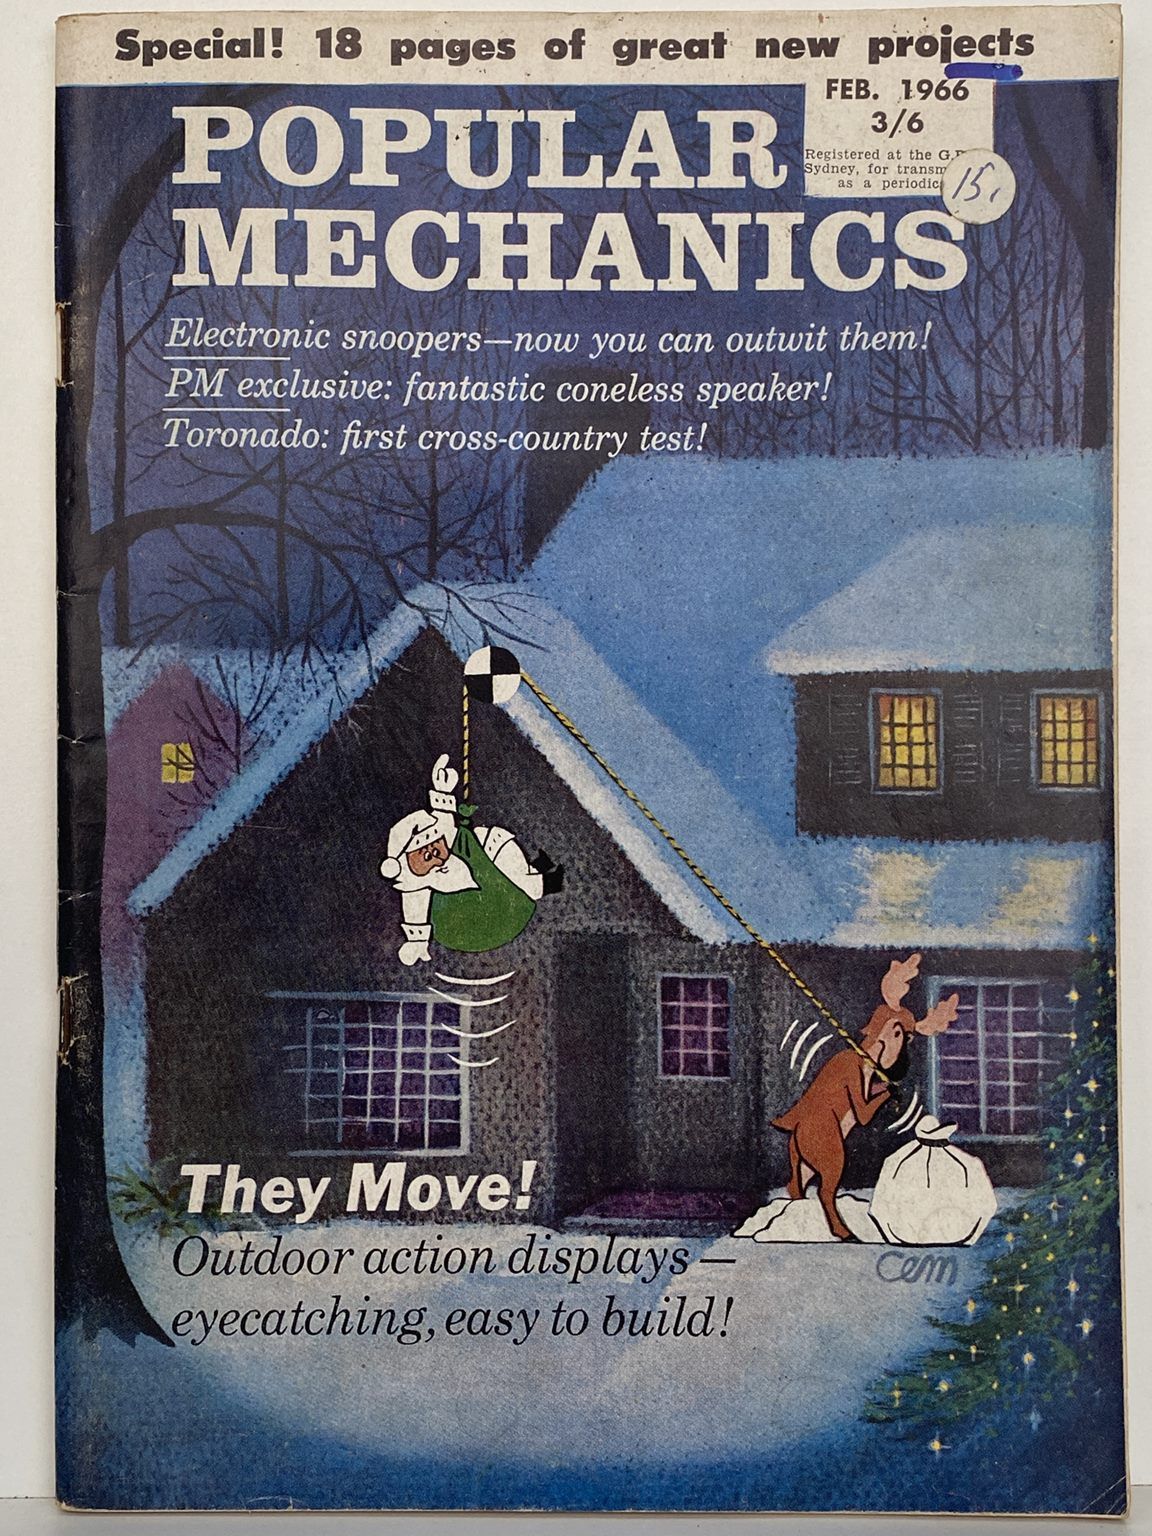 VINTAGE MAGAZINE: Popular Mechanics - Vol. 124, No. 6 - February 1966